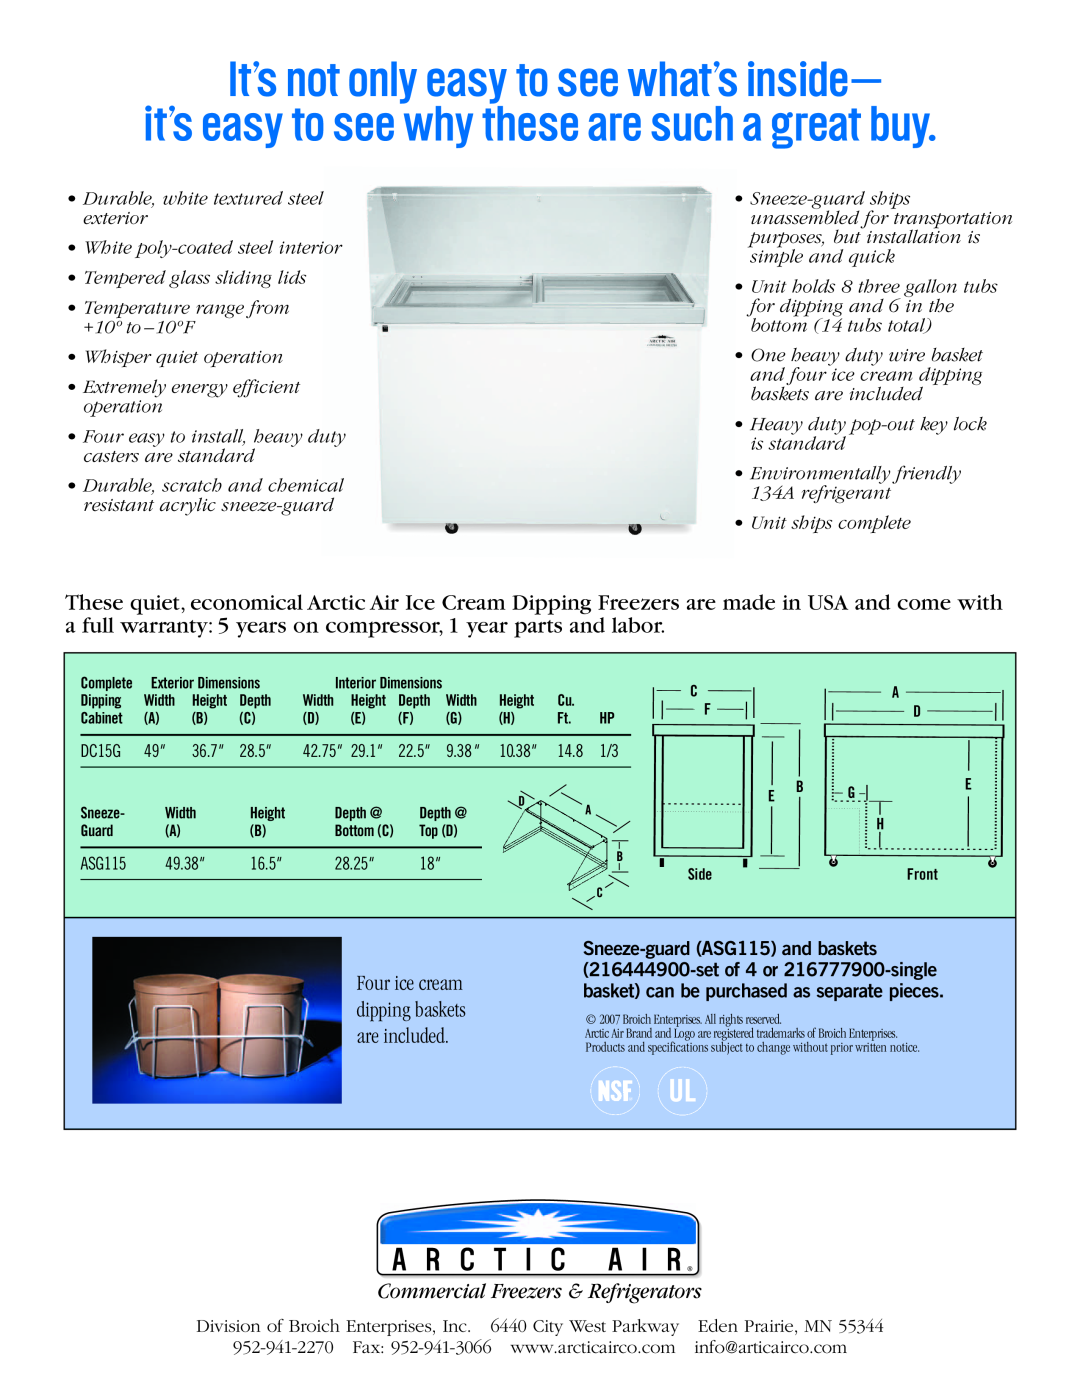 Arctic Air DC15G specifications A R C T I C A I R, Commercial Freezers & Refrigerators 